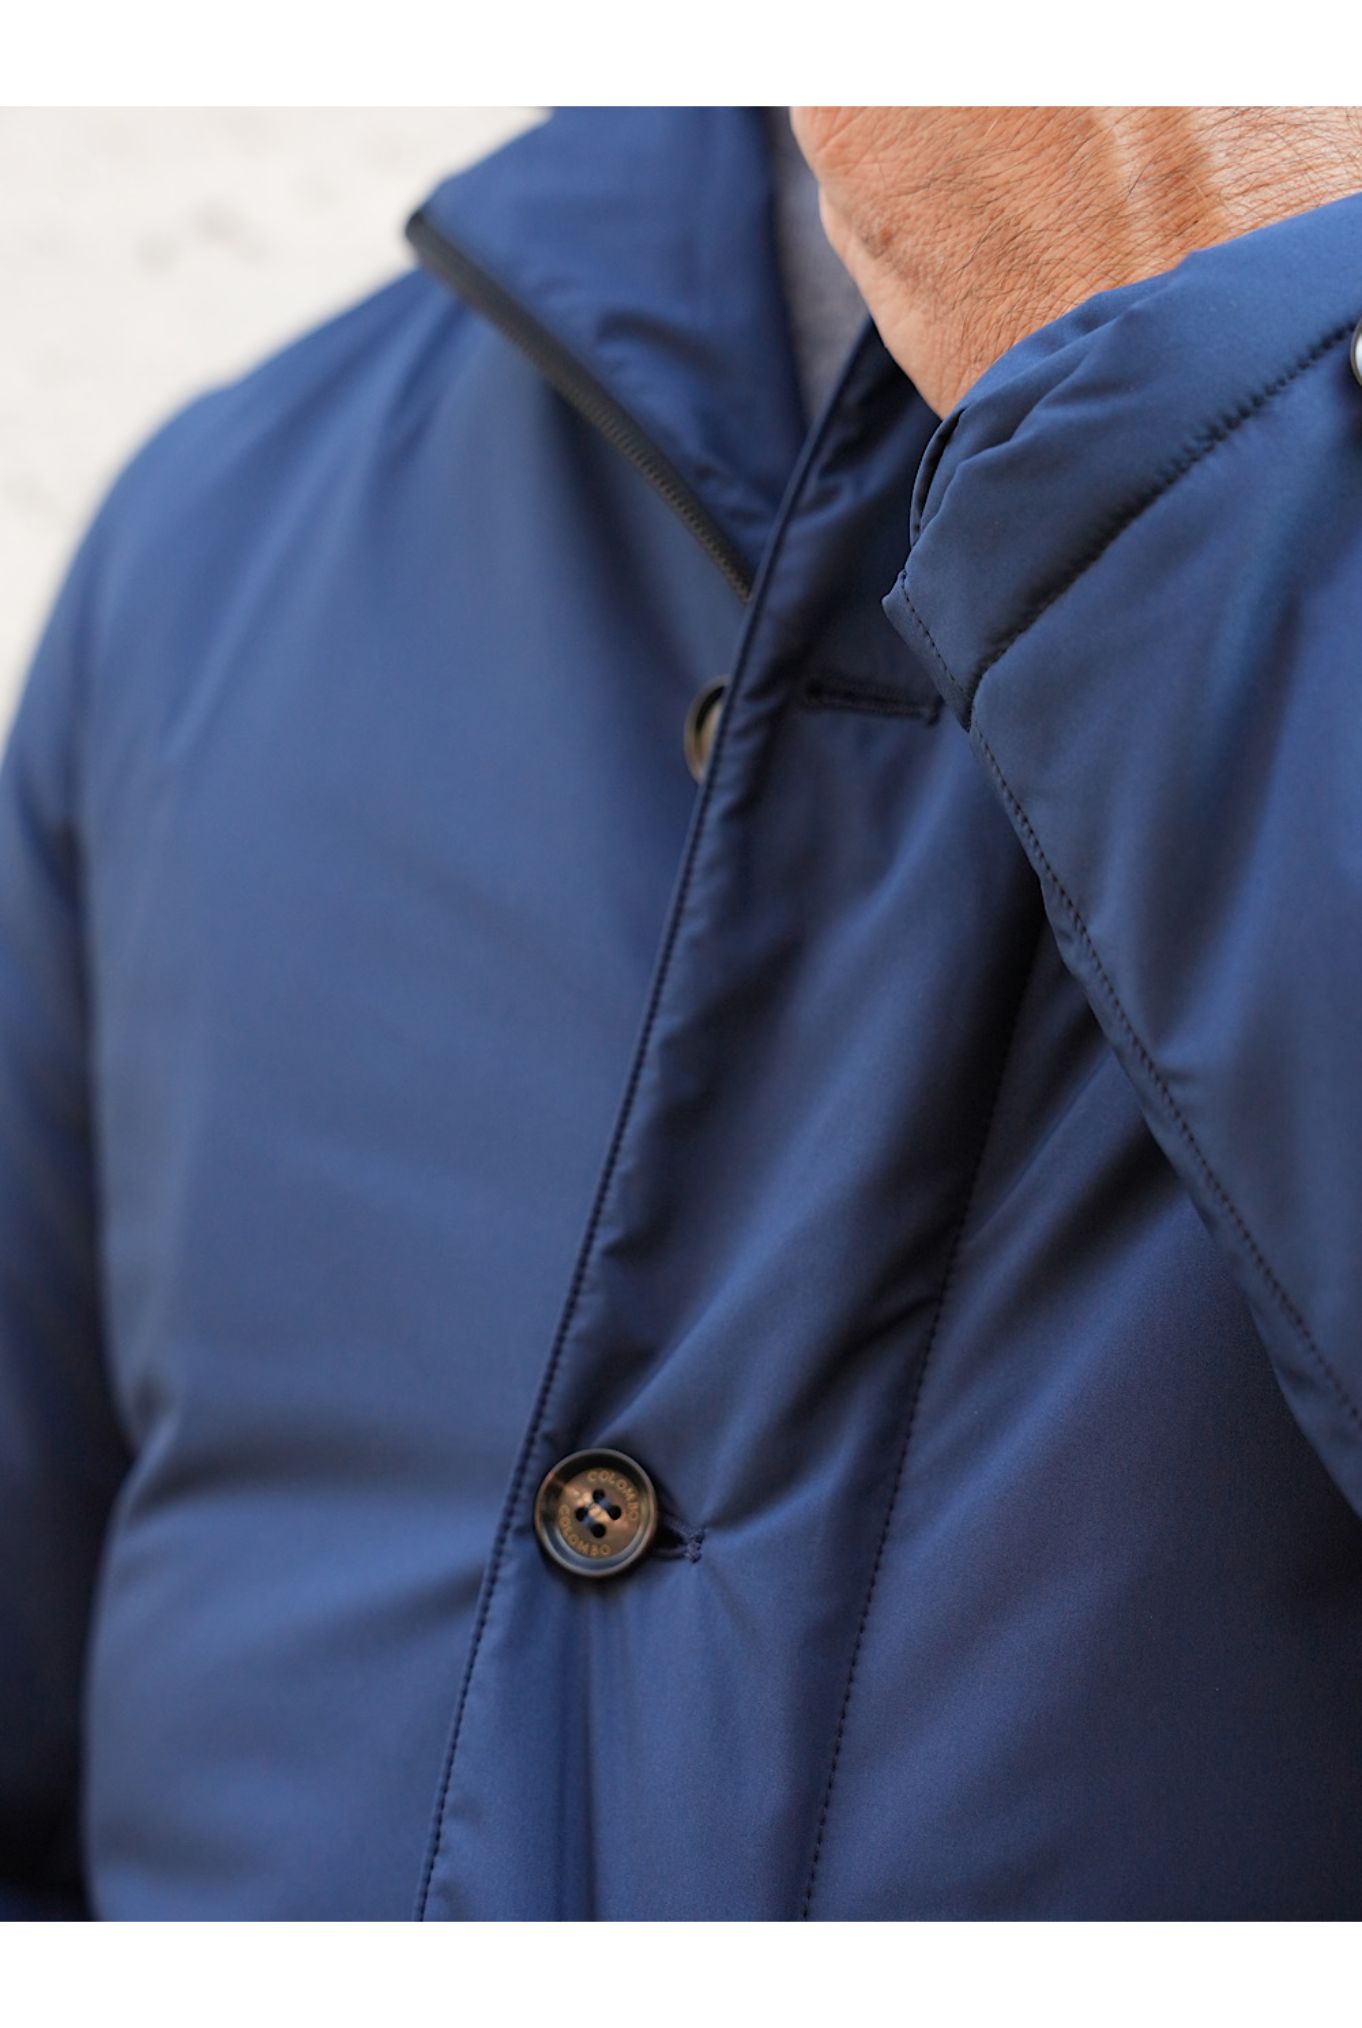 Colombo Blue Cashmere Lined Jacket